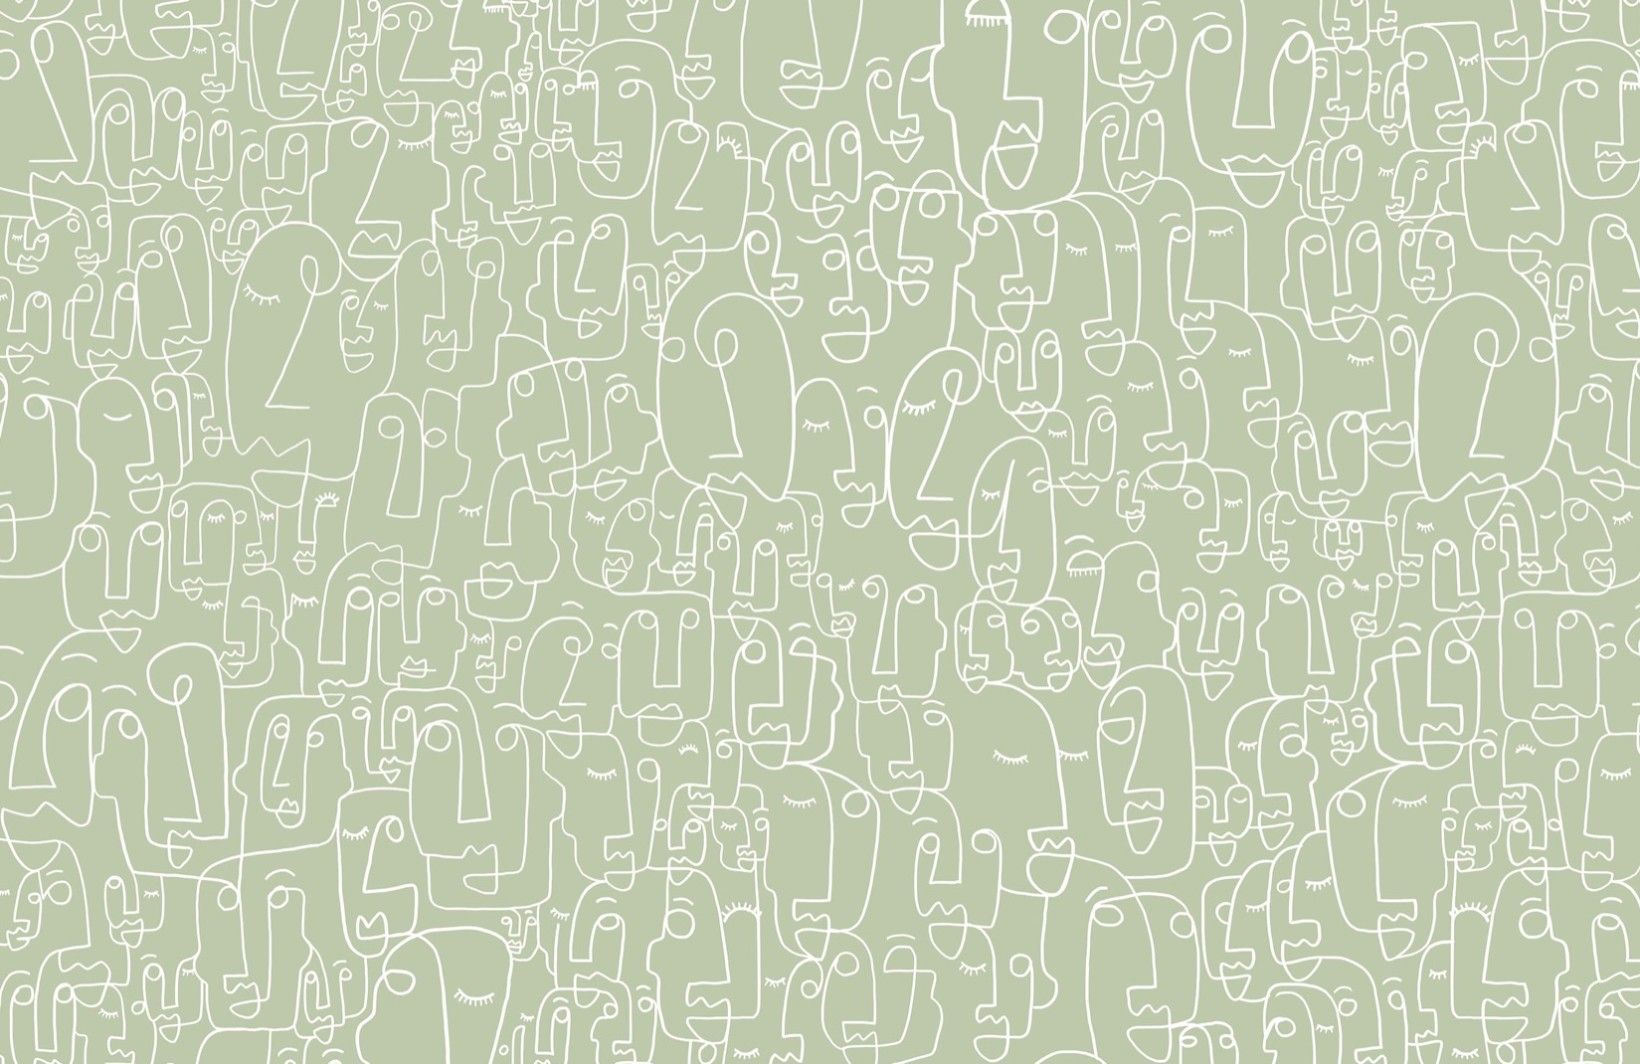 Mac Green Wallpapers